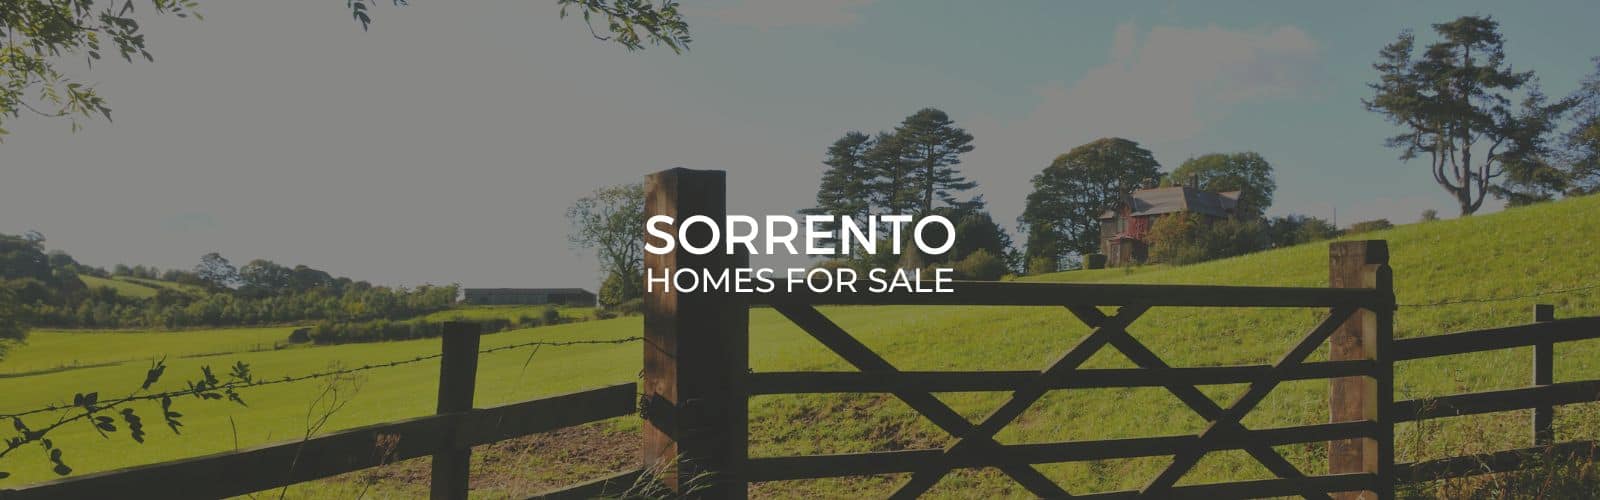 Sorrento Homes for Sale